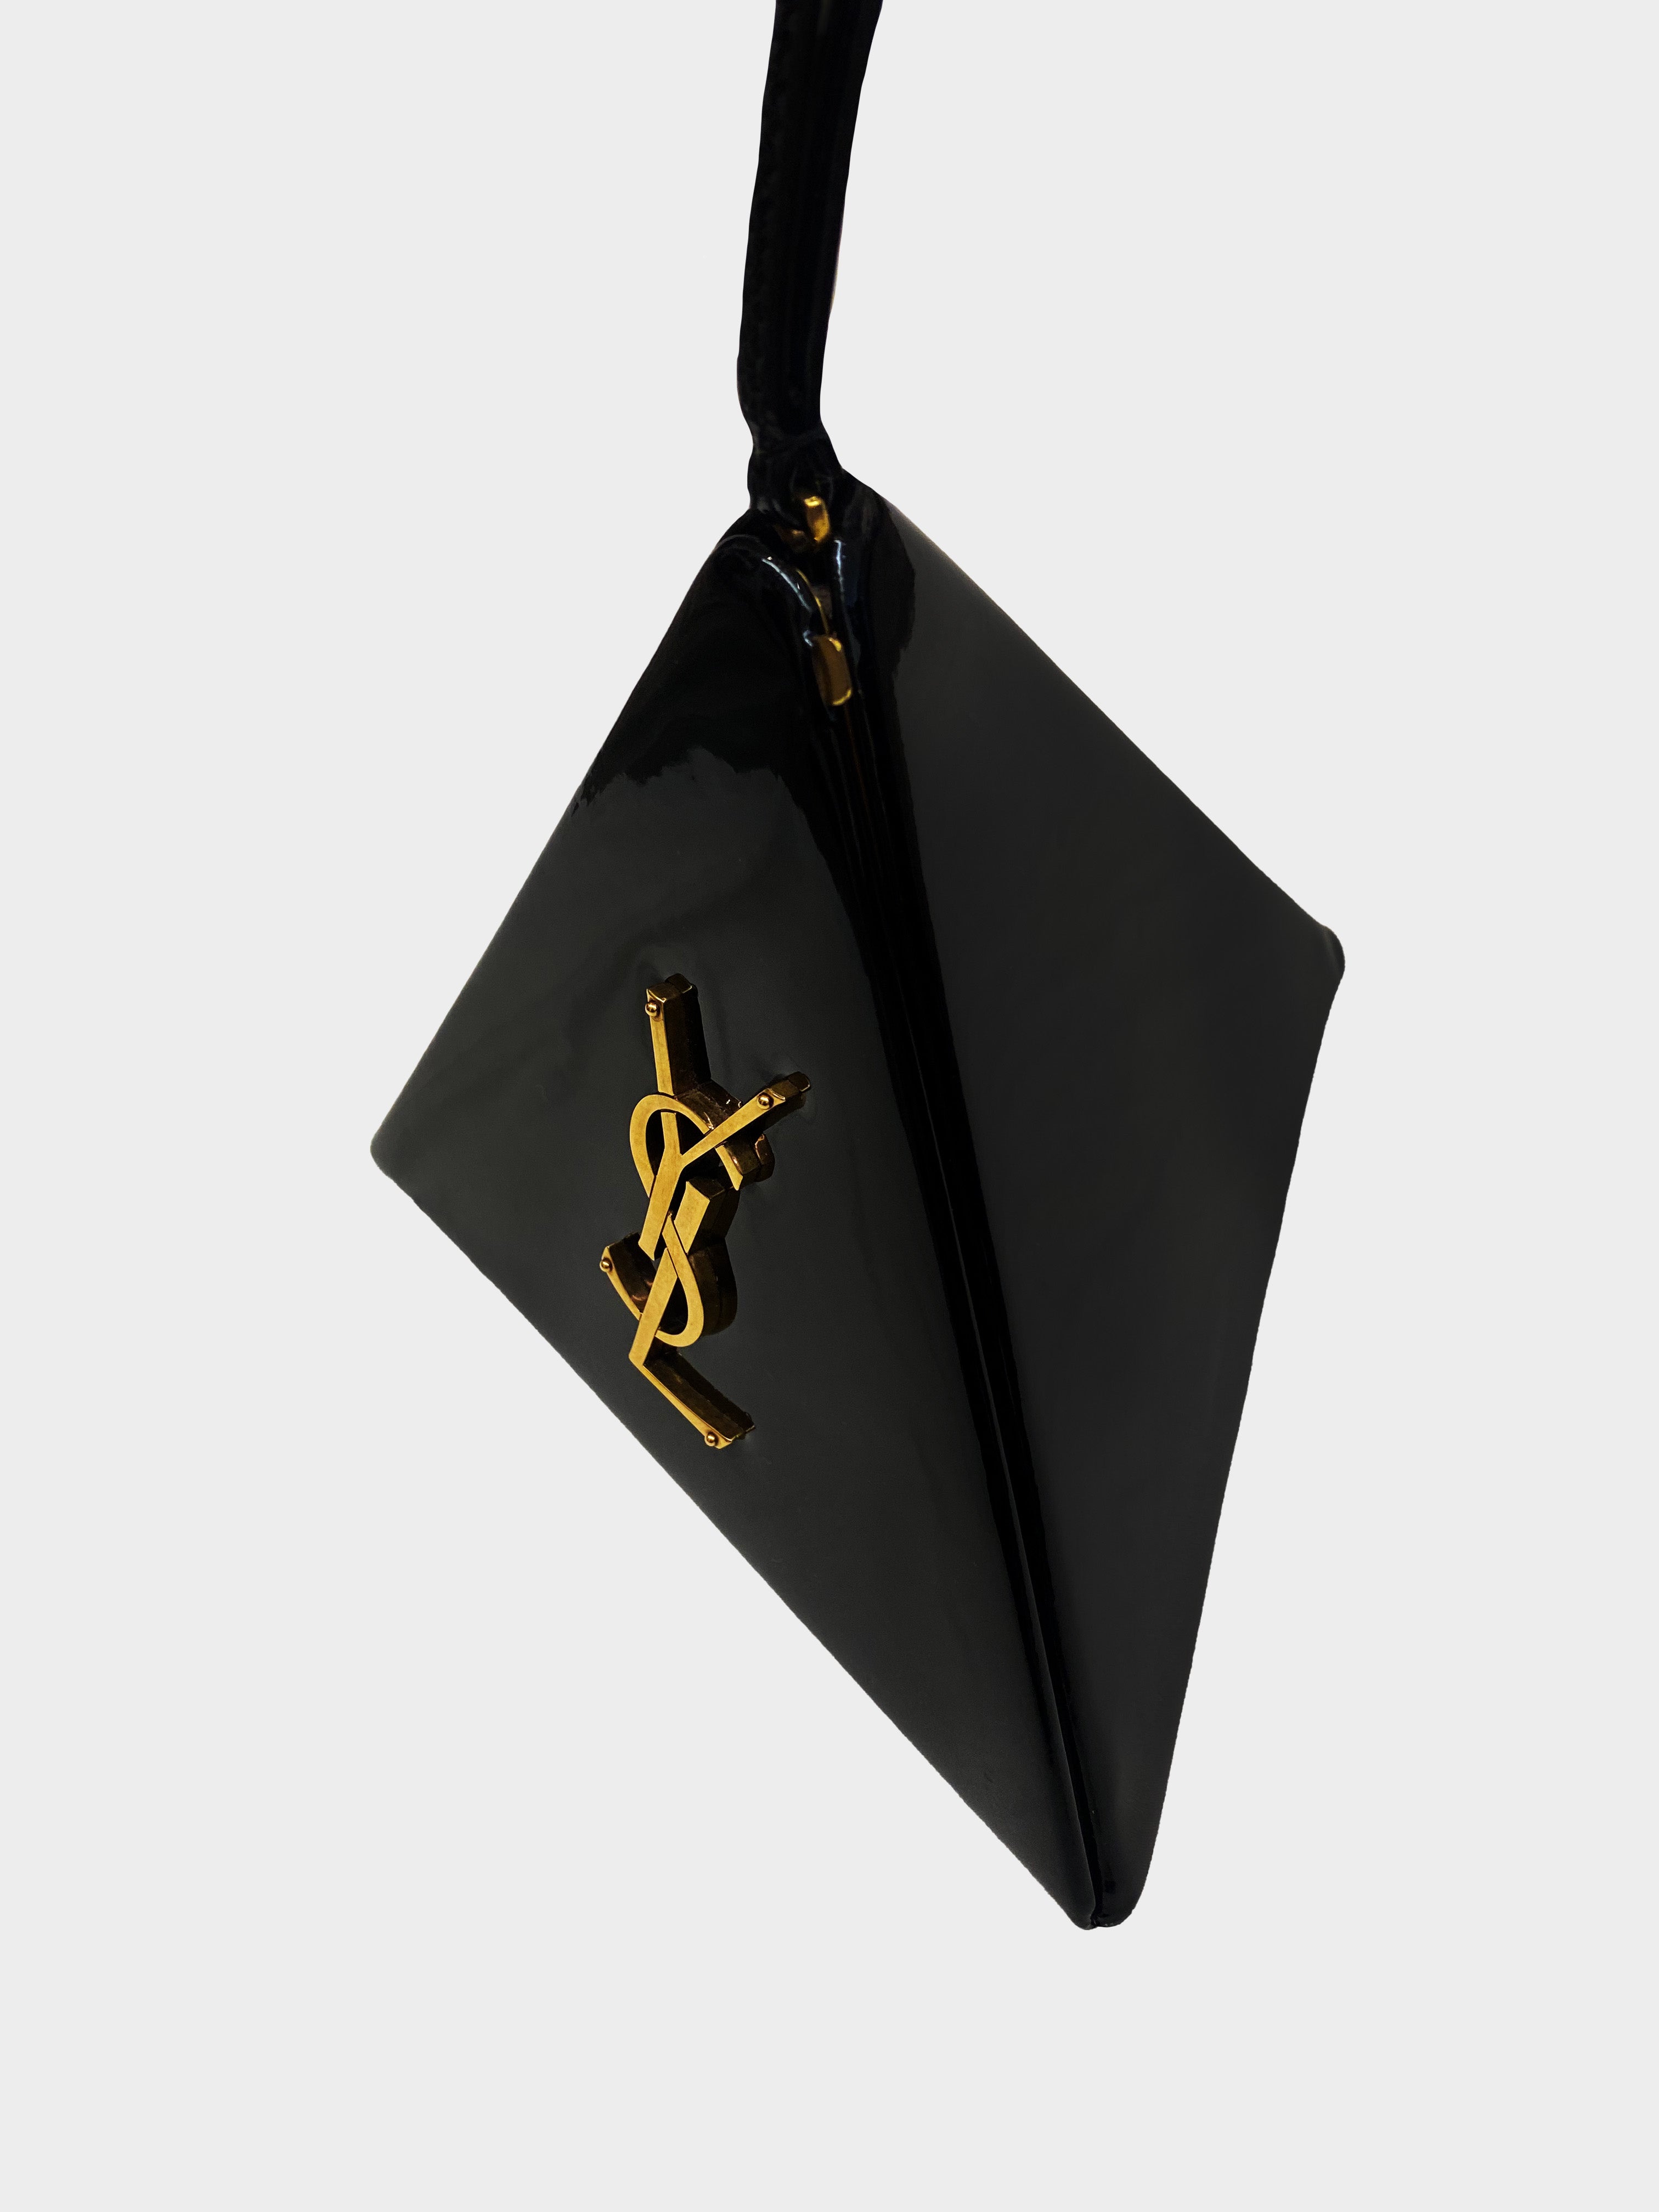 Saint Laurent Fall 2018 Patent Leather Pyramid Bag